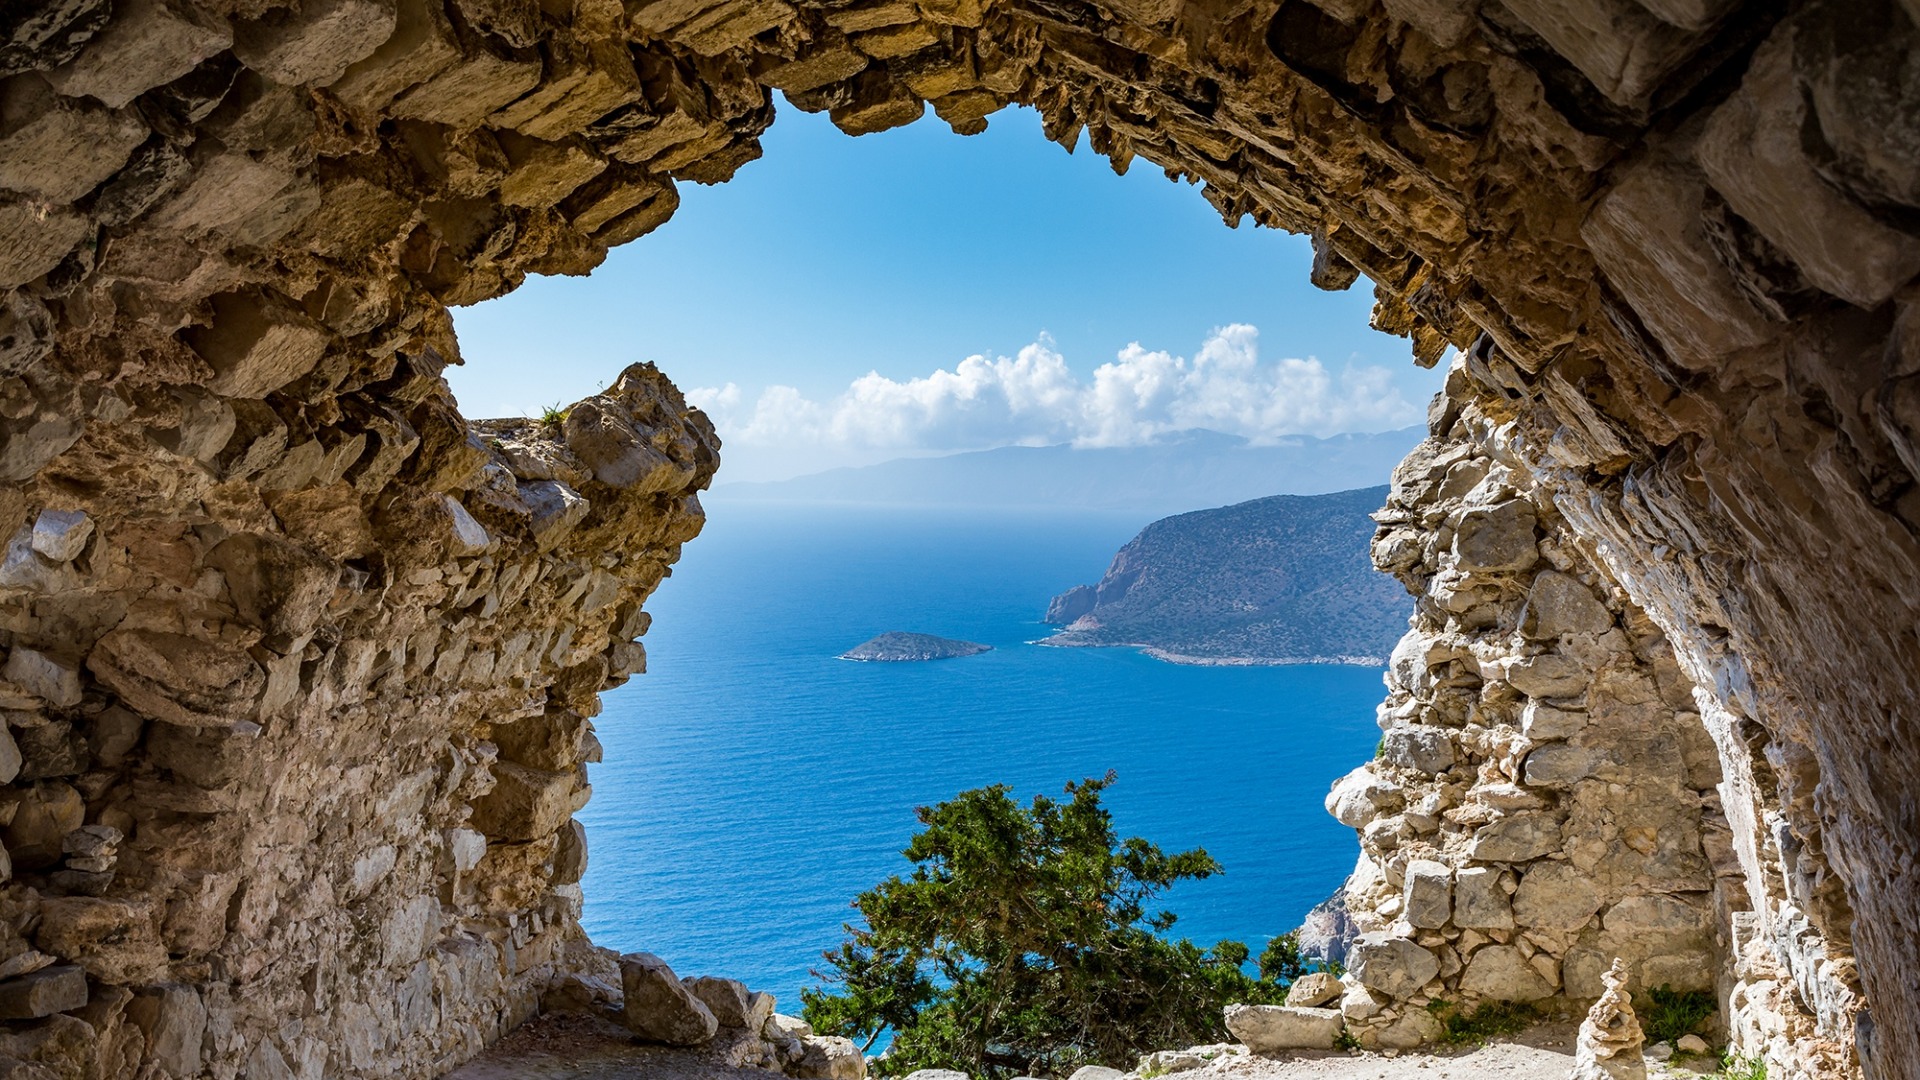 General 1920x1080 sea cave rocks island Rhodes Greece clouds blue stone arch ruins sky sky blue